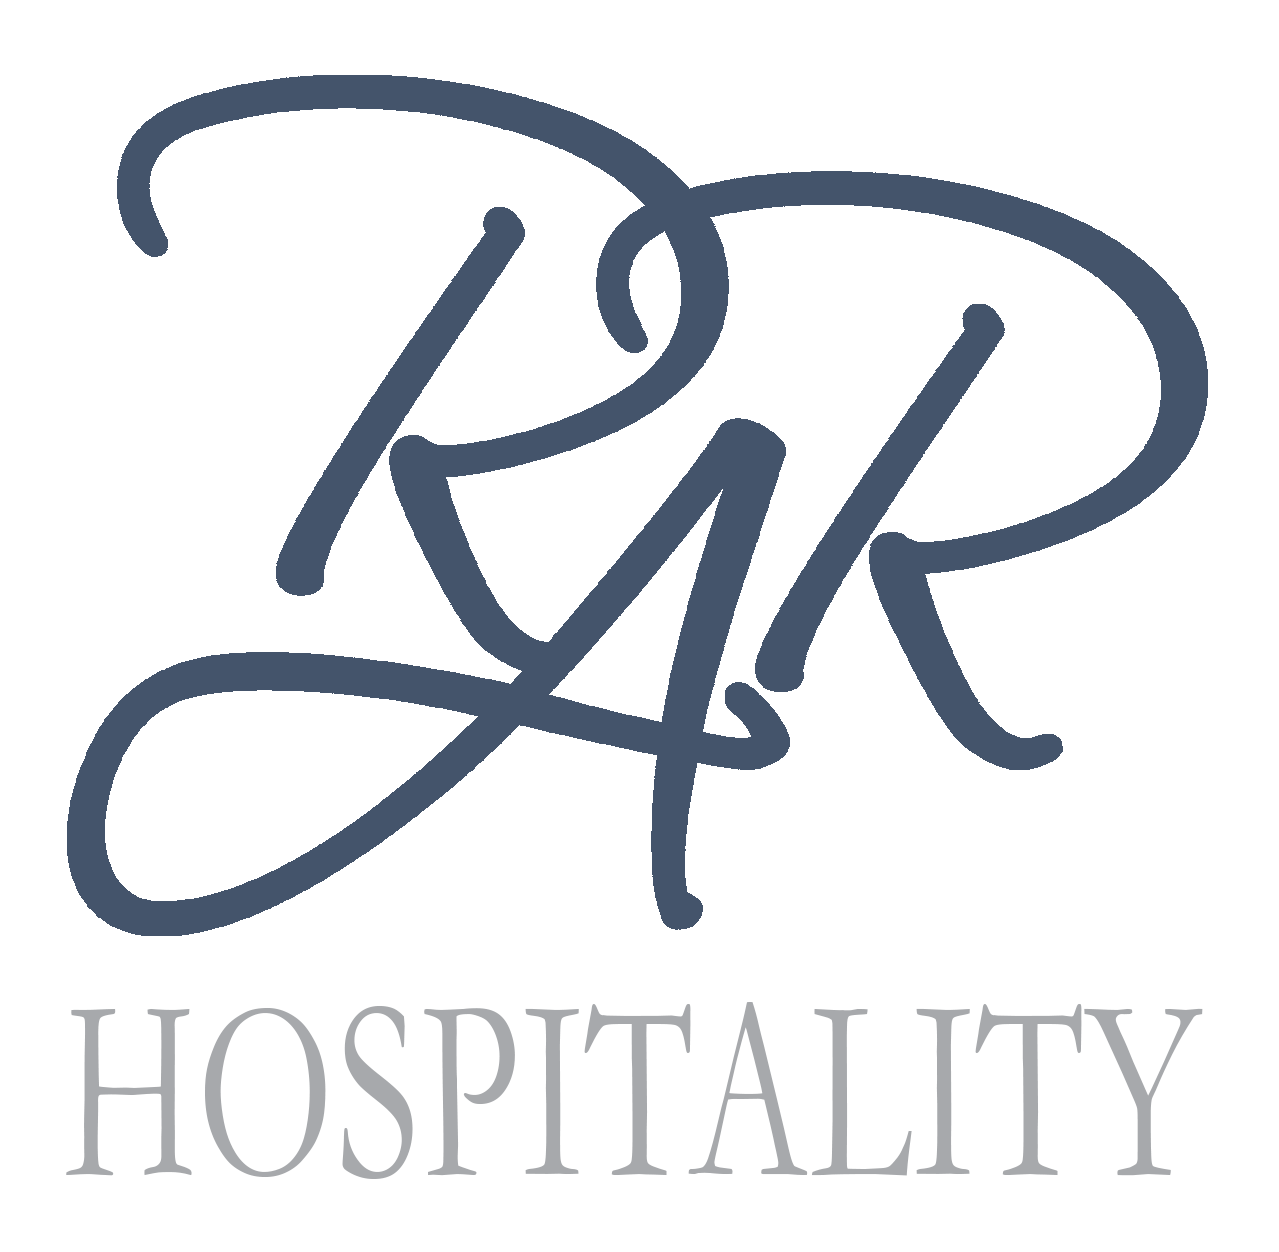 Hospitality Logo - RAR Hospitality